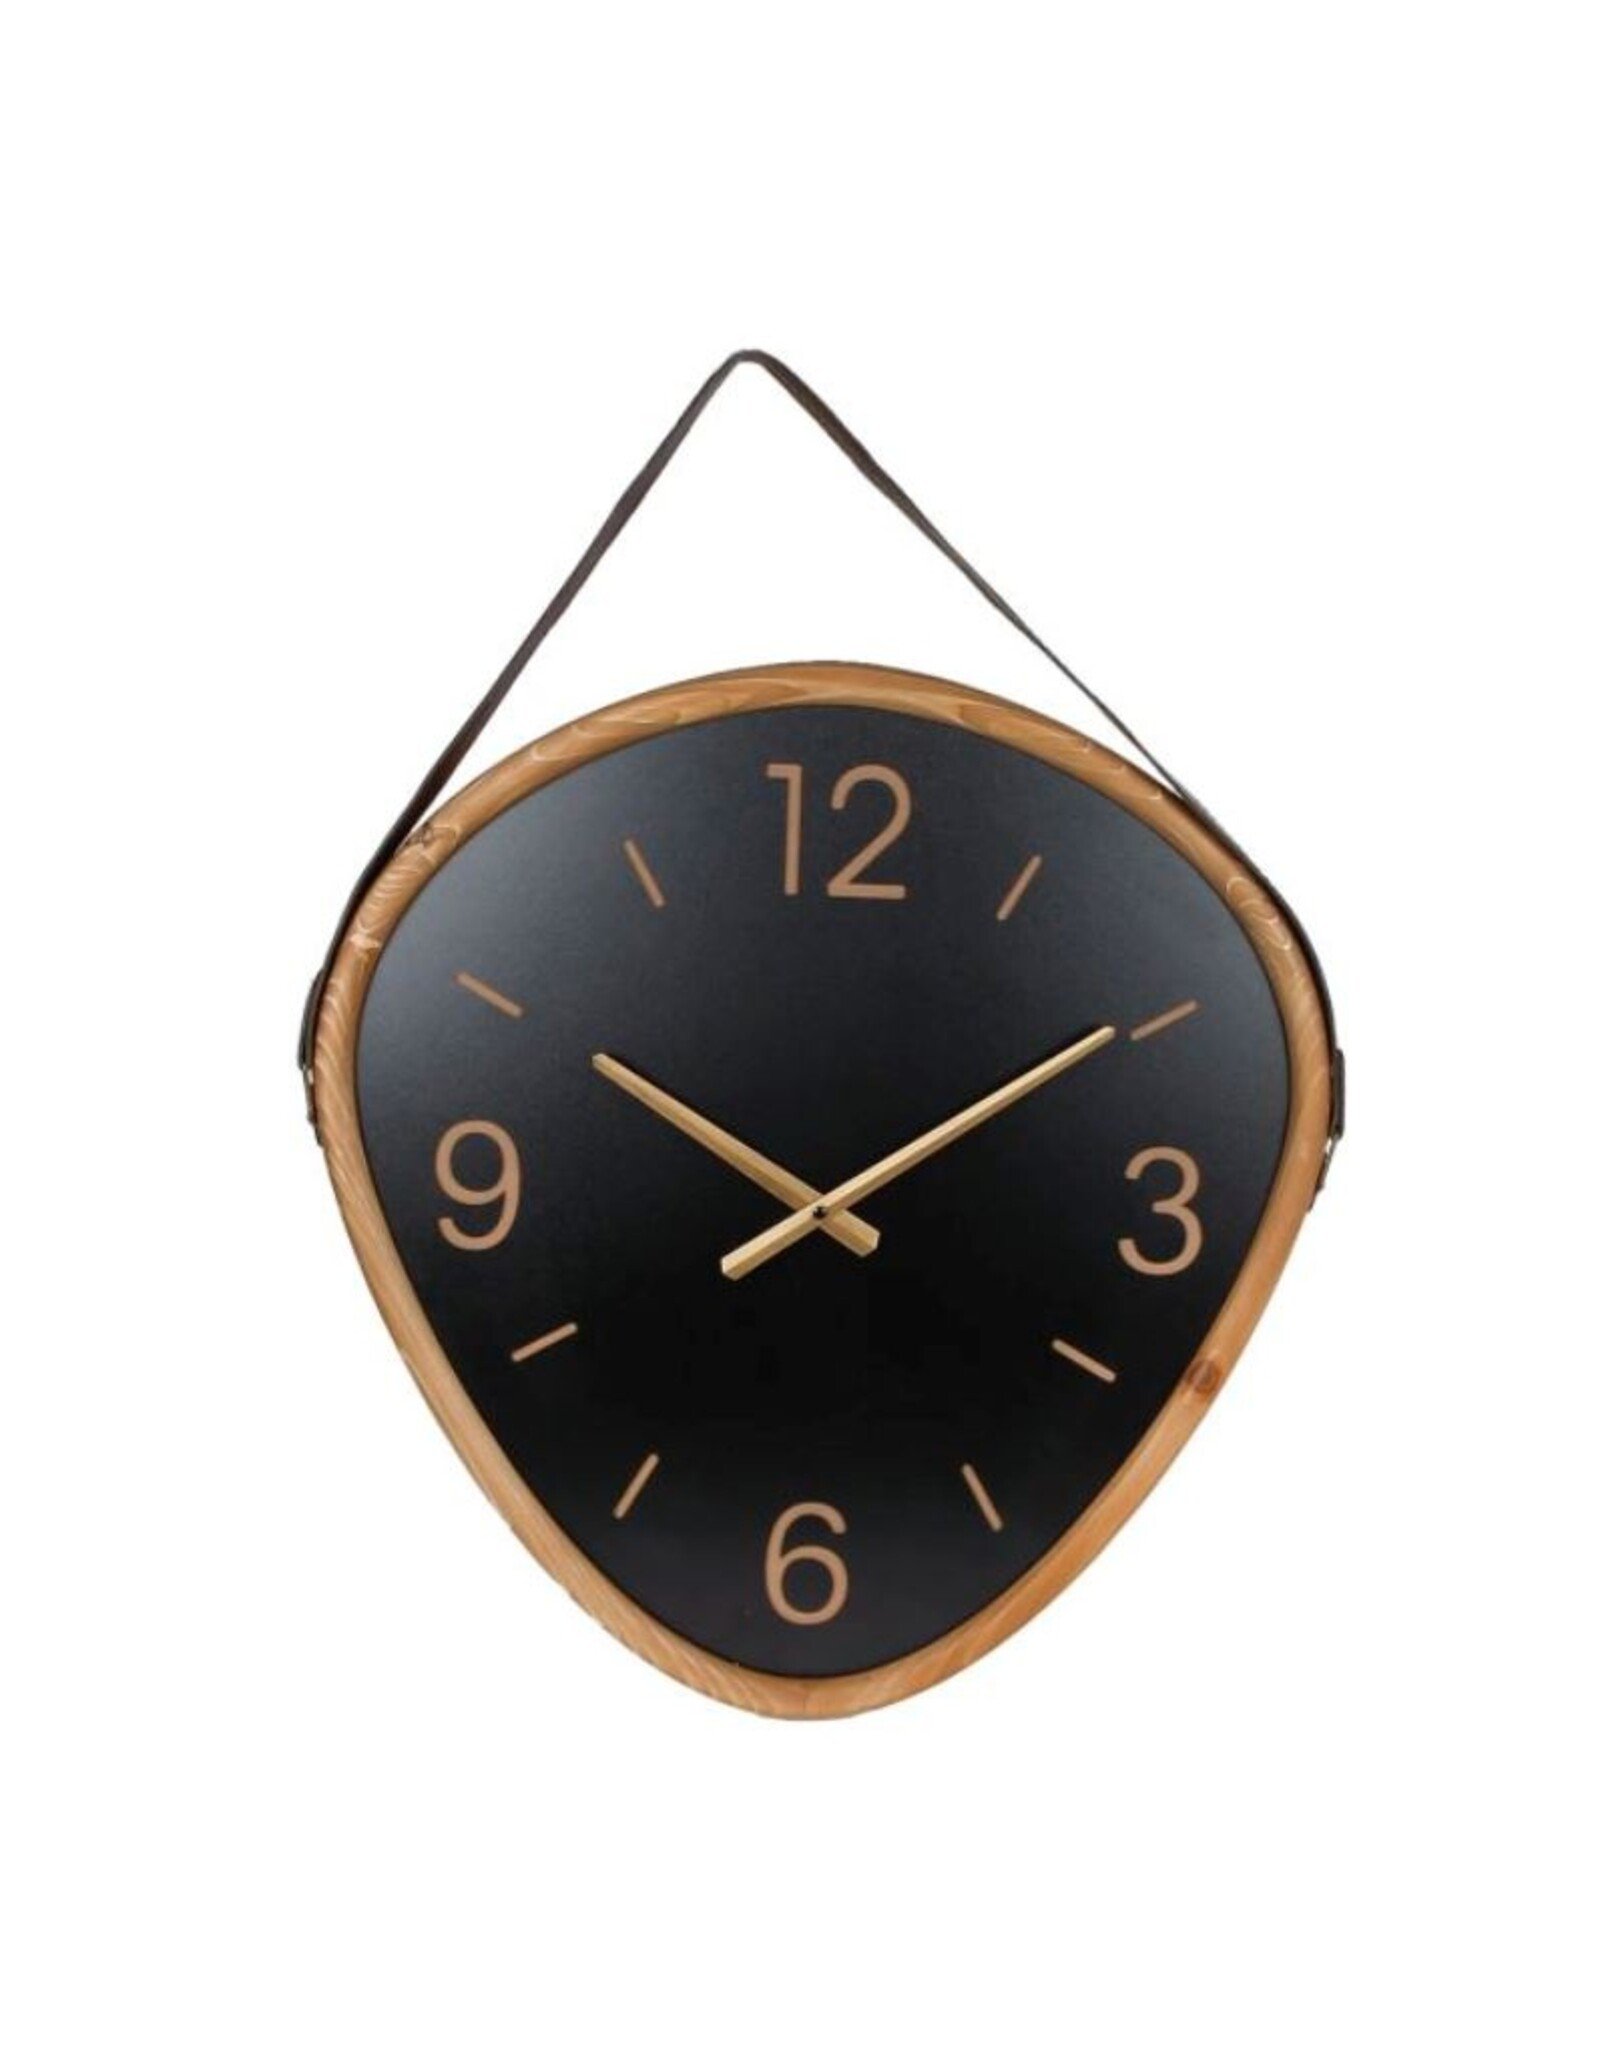 Van Manen Miscellaneous - Retro Wall Clock with leather strap "Jelle"